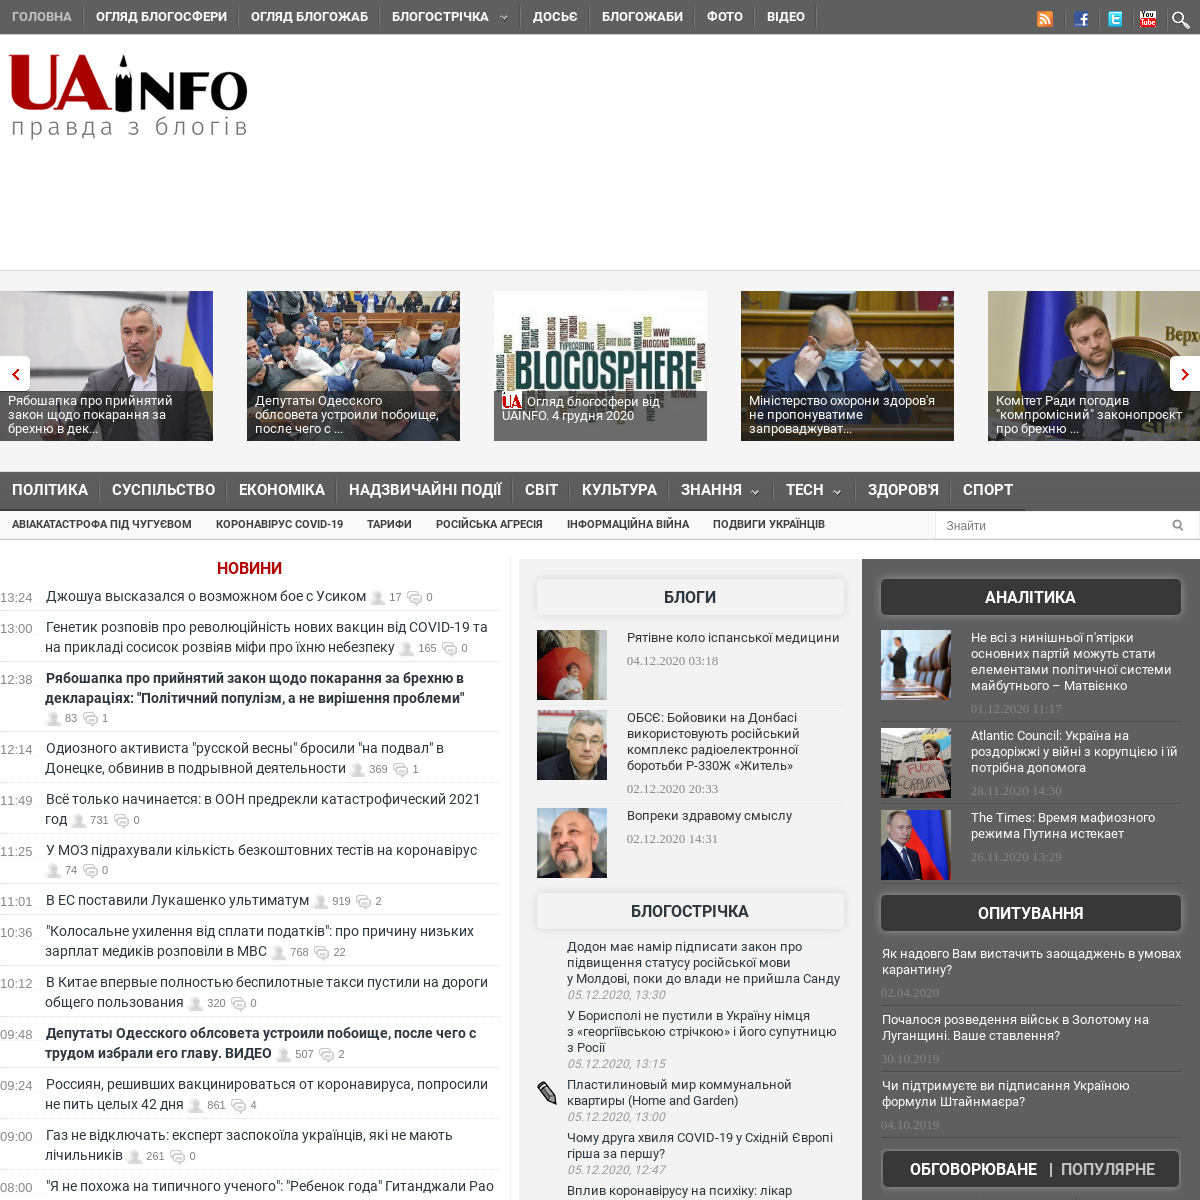 A complete backup of uainfo.org